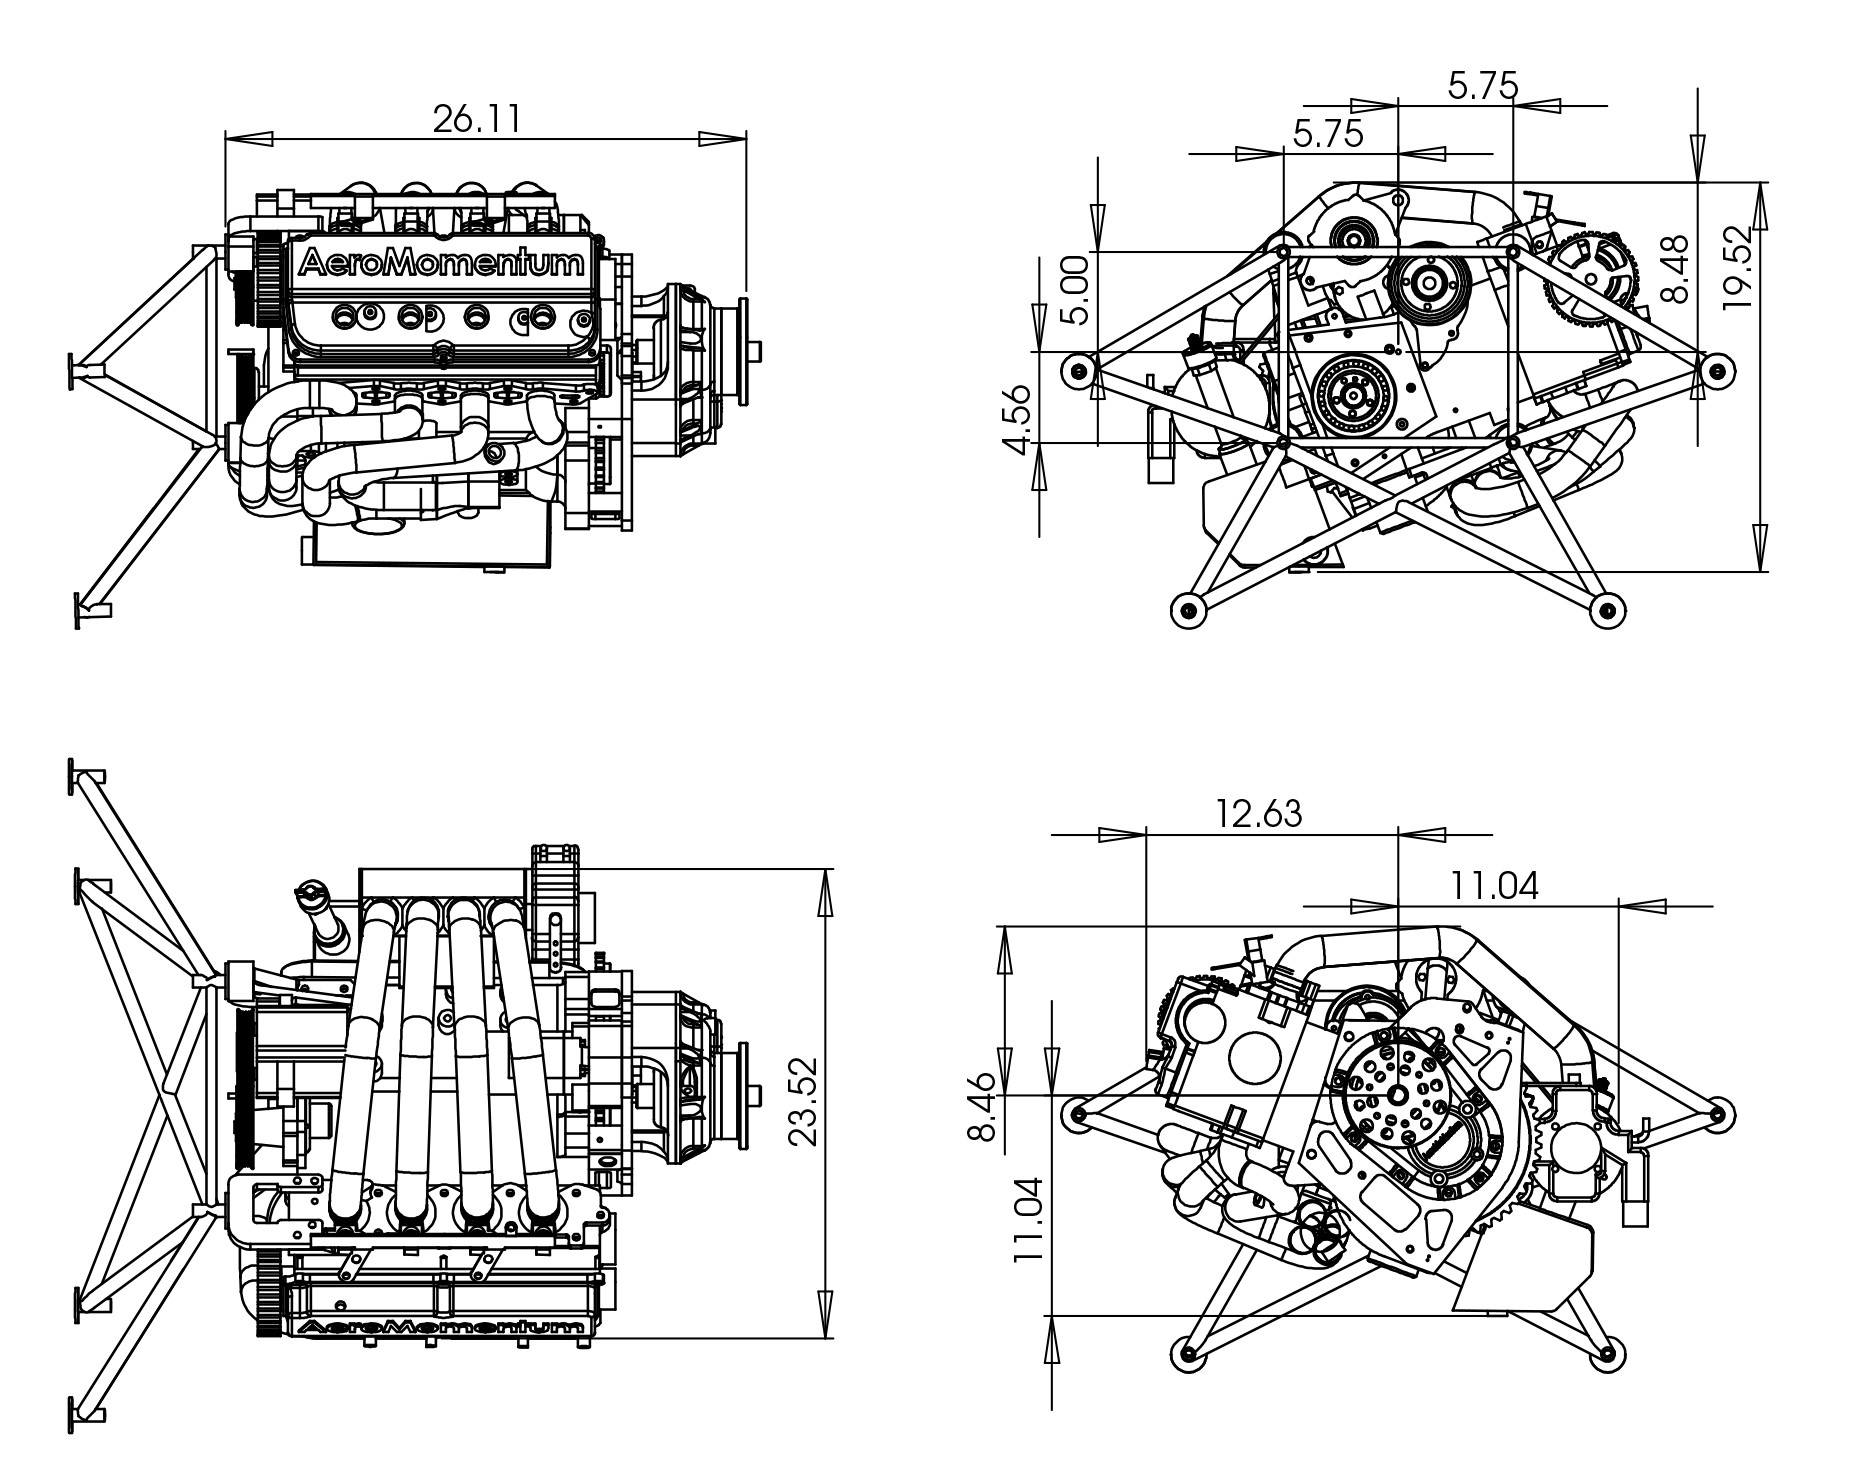 Rotax Engine Diagram | My Wiring DIagram